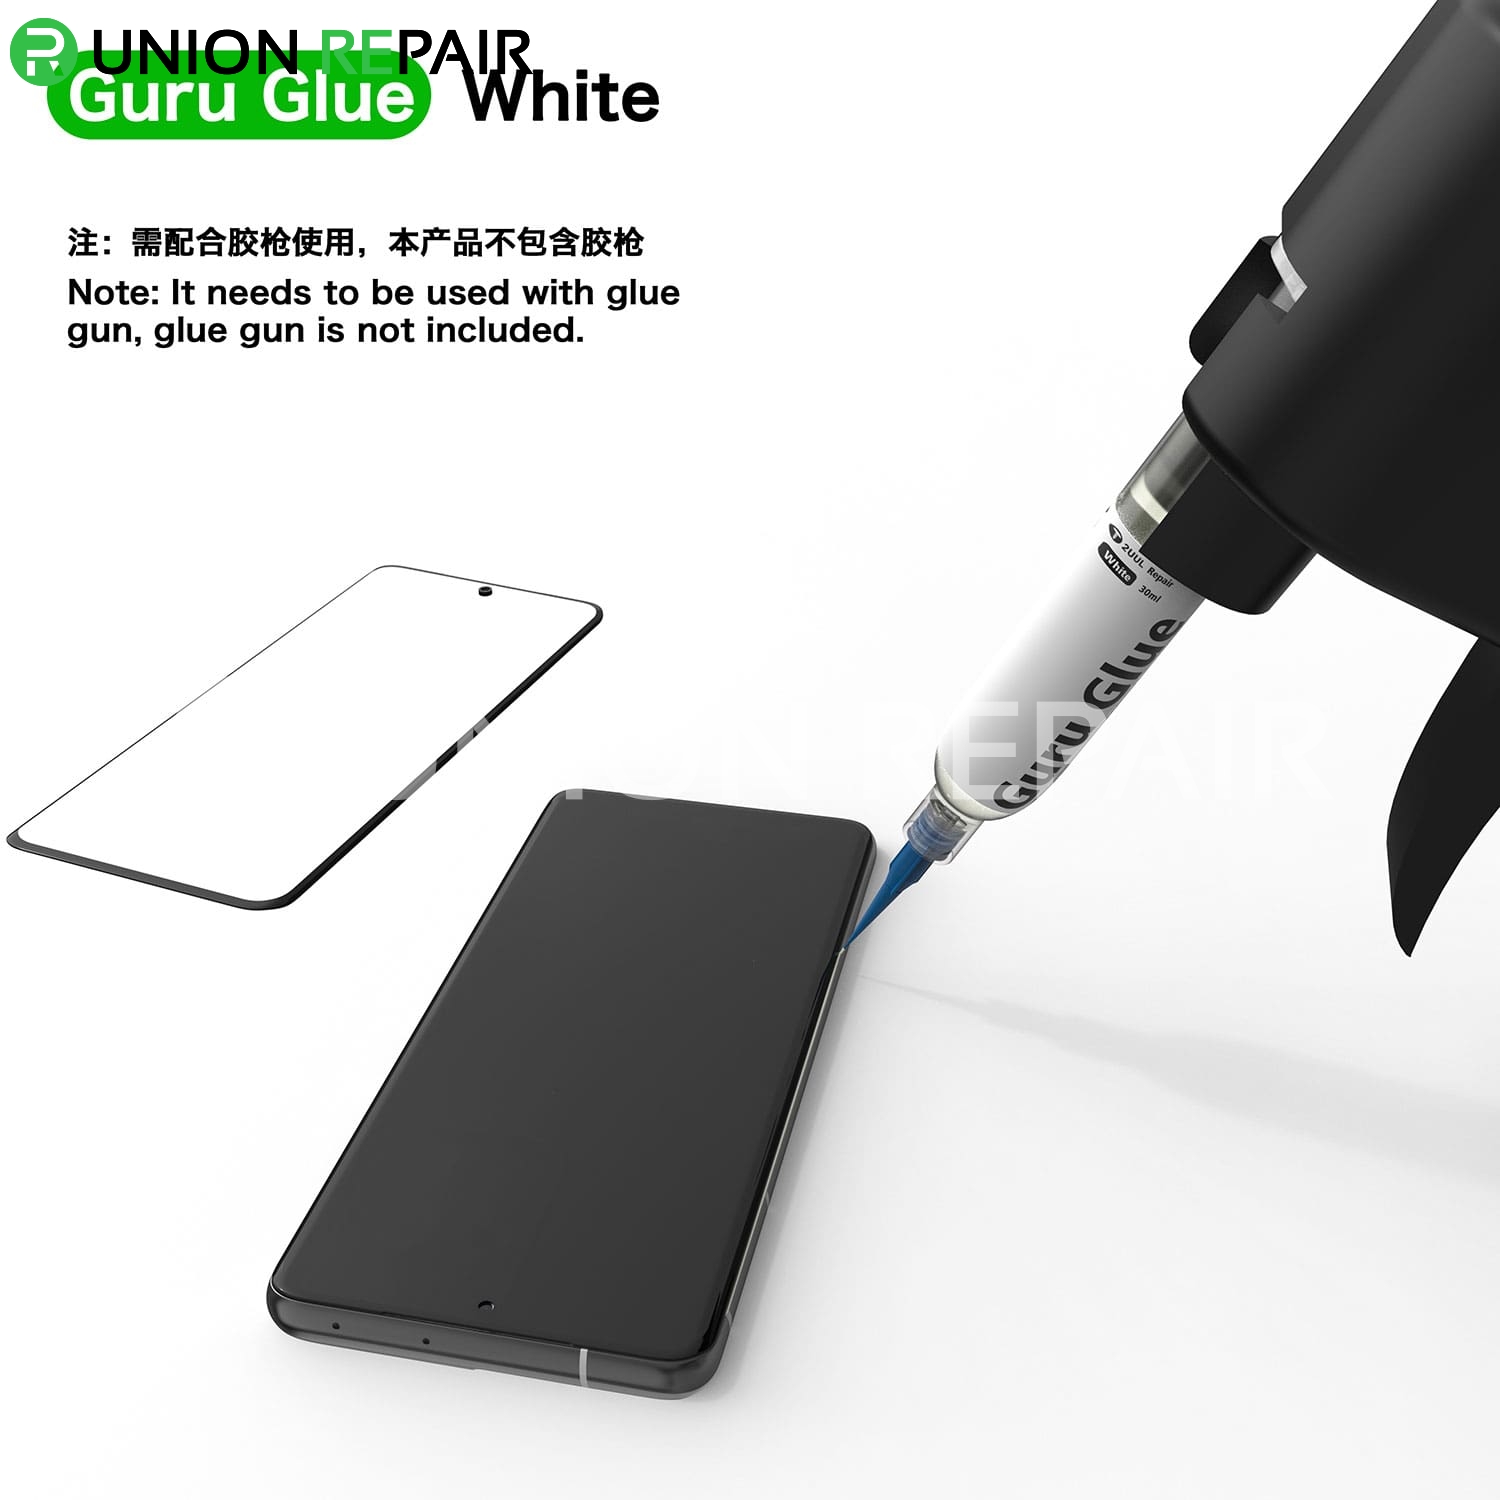 2UUL Guru Glue Soft Buffer Adhesive for Phone Repair 30ML (Black/White)